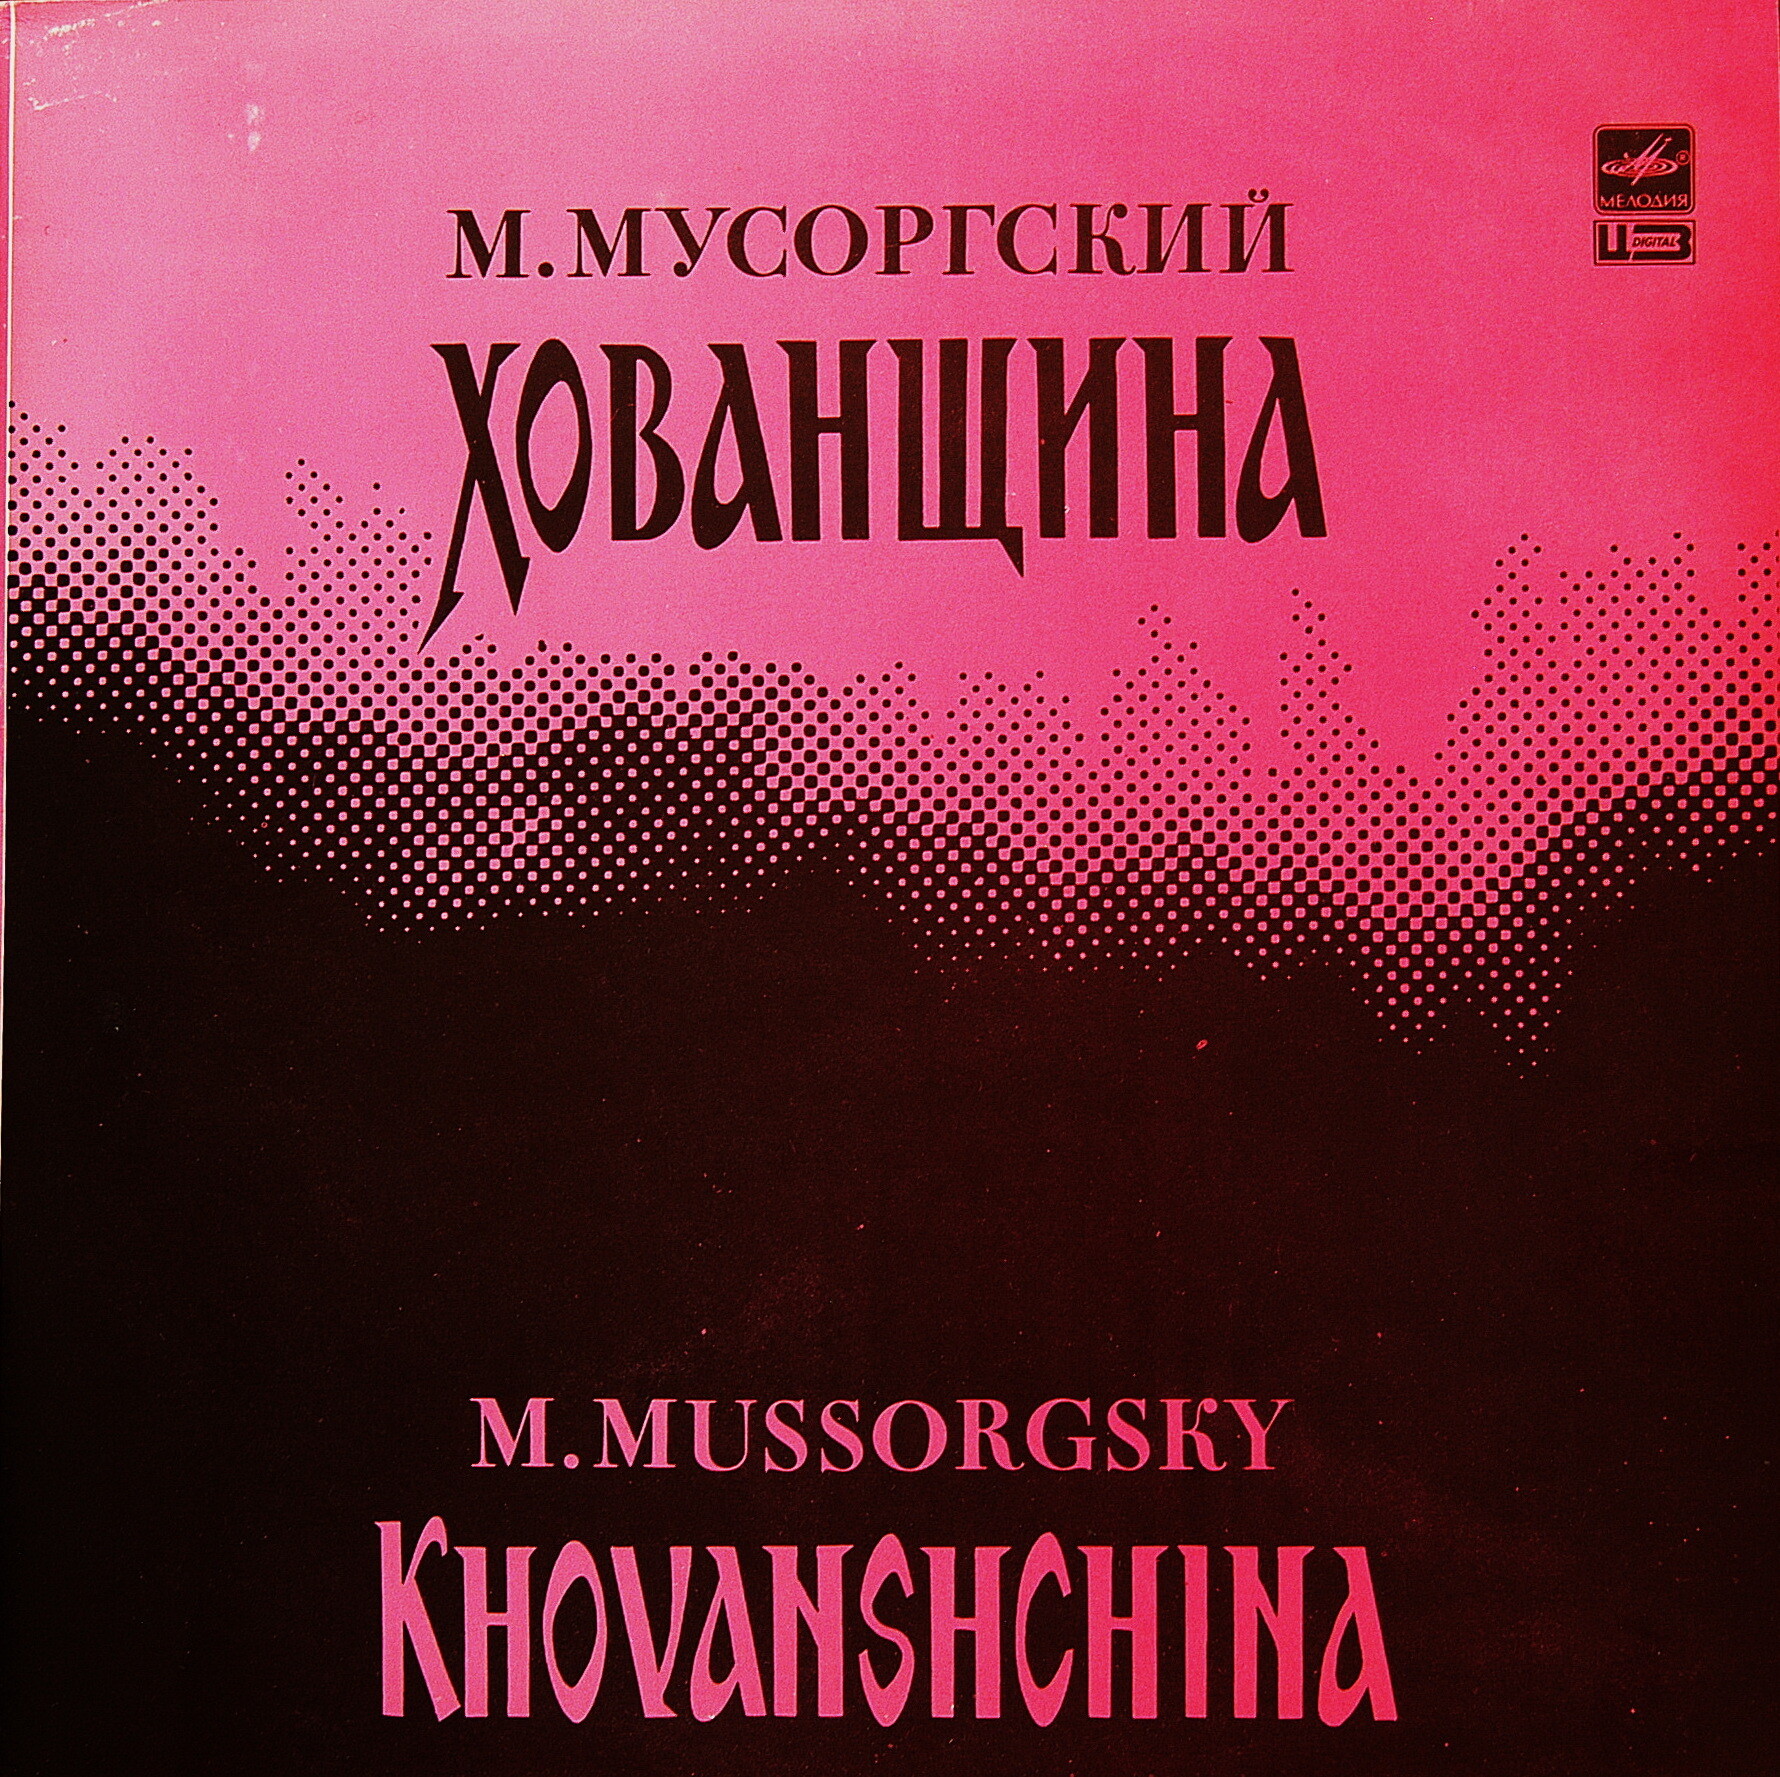 М. МУСОРГСКИЙ (1839-1881) «Хованщина»